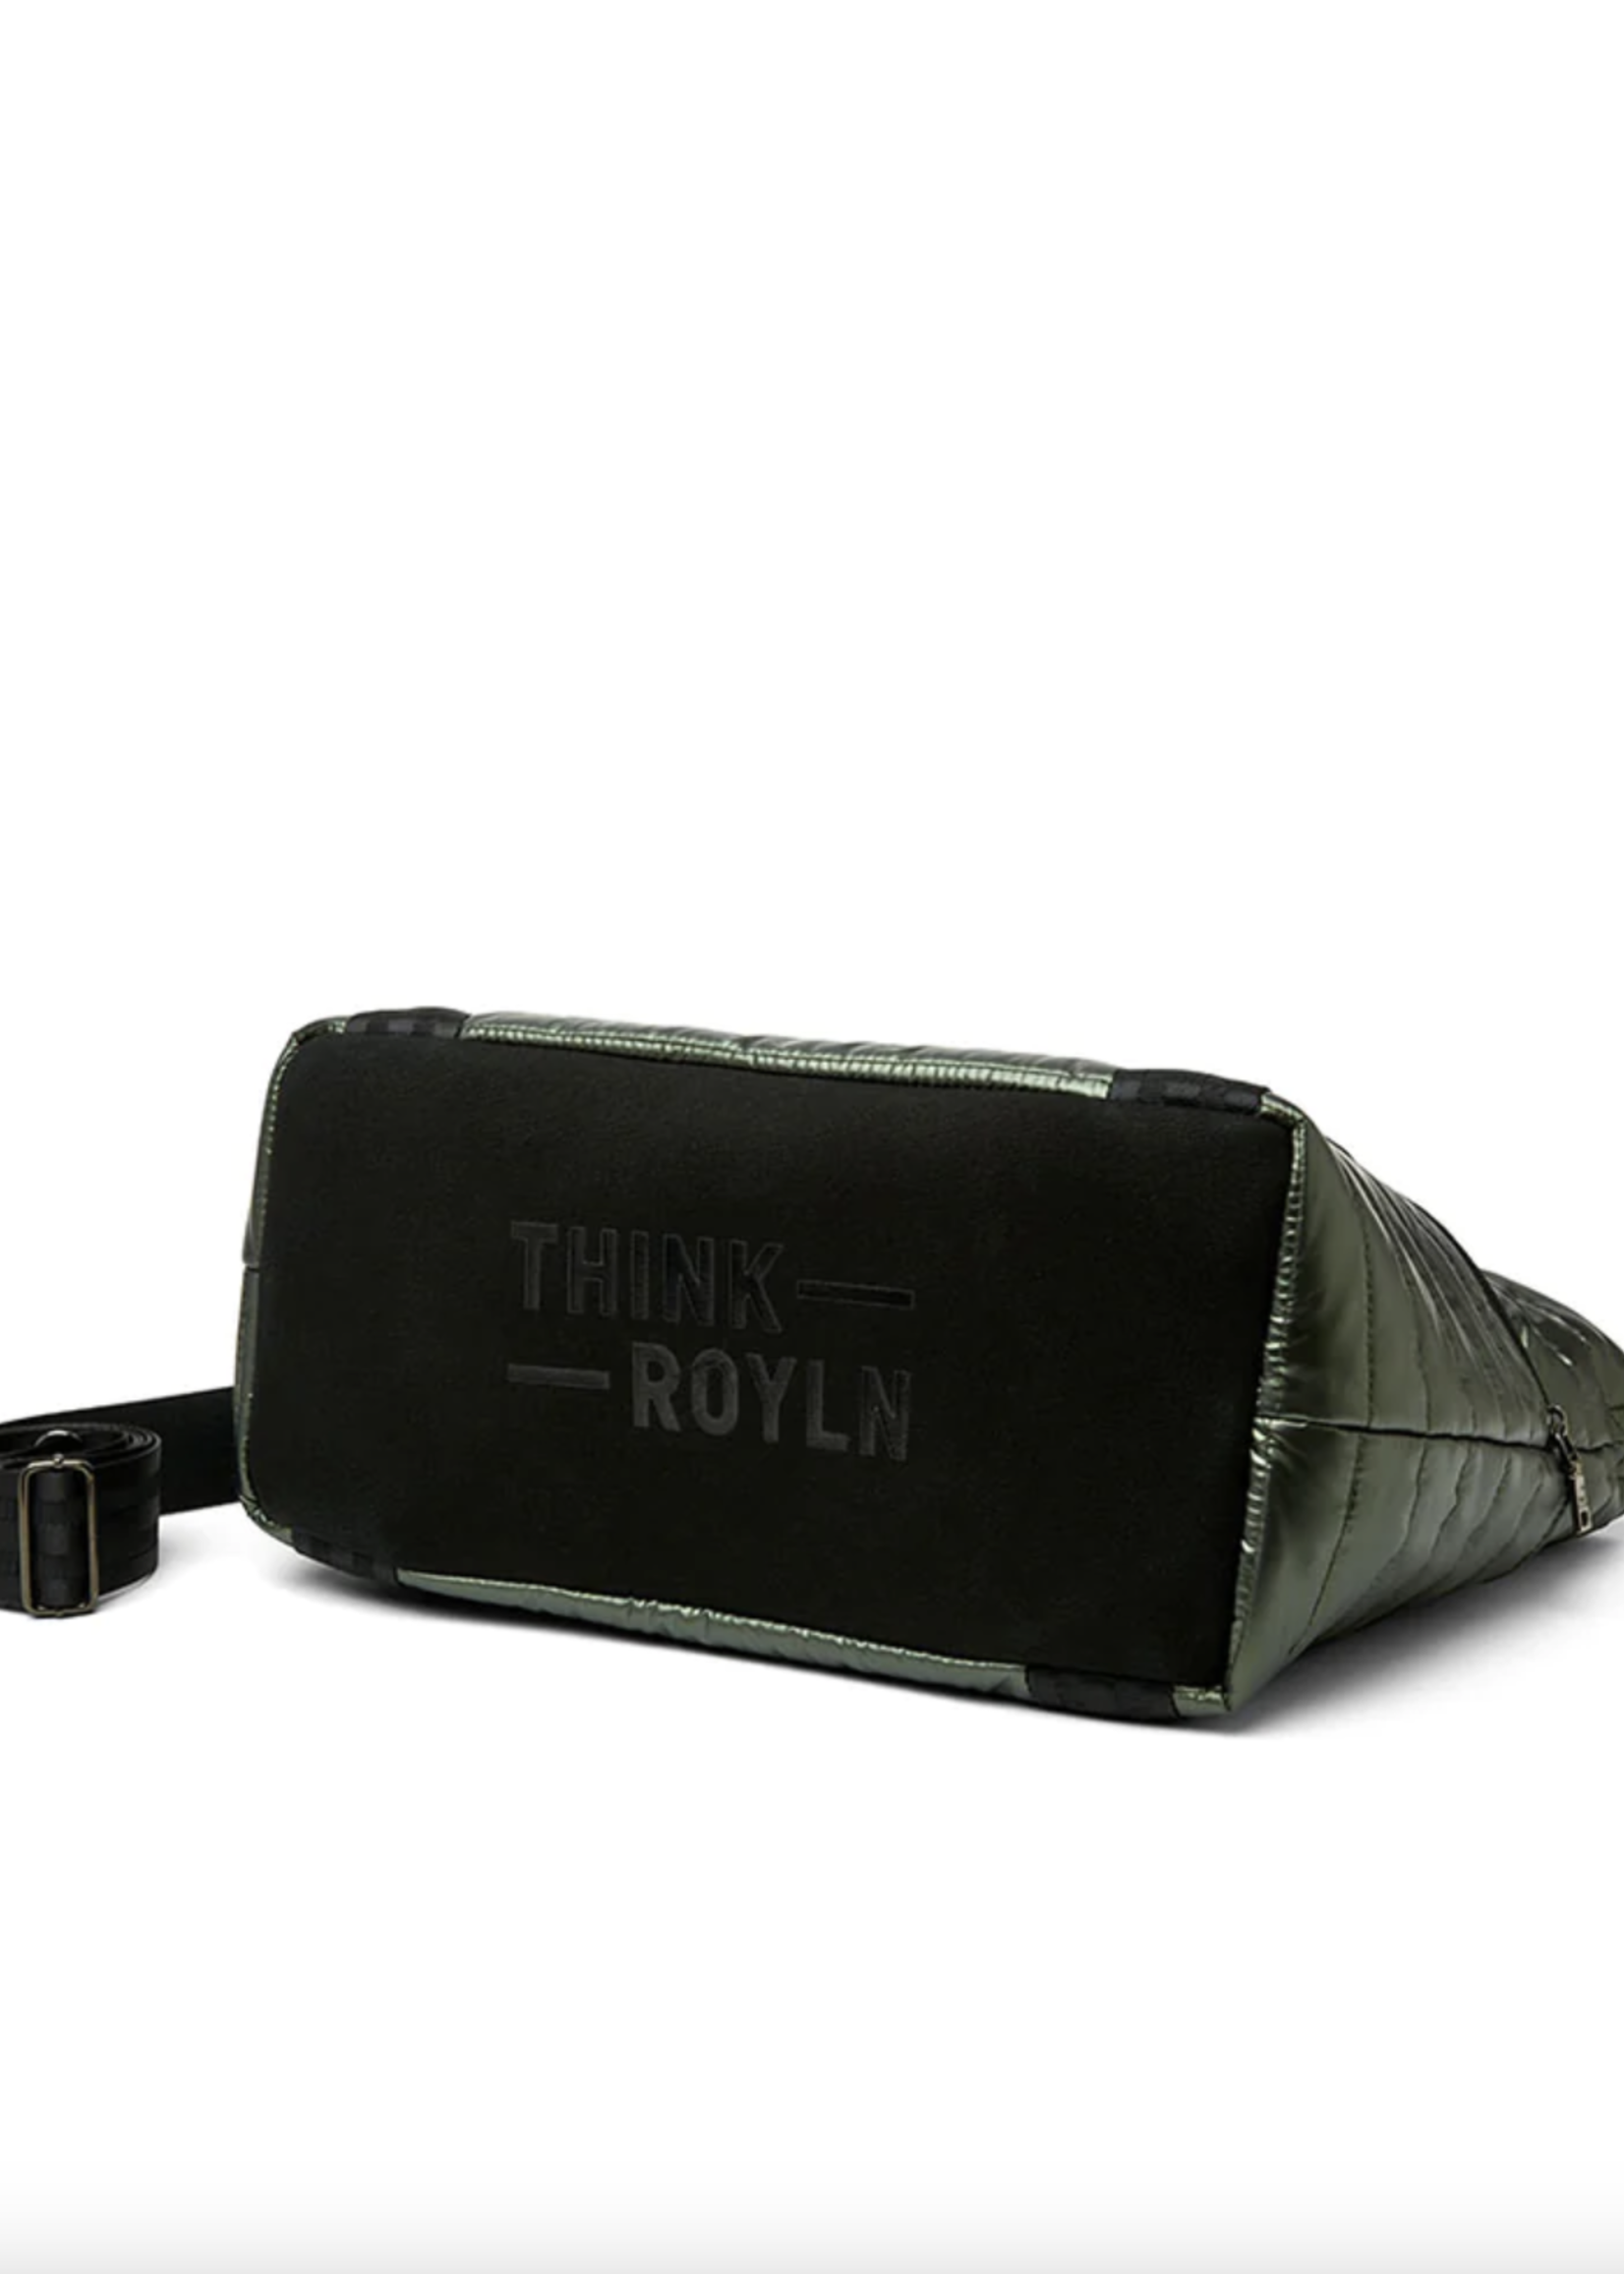 THINK ROYLN, Bags, New Think Royln Wingman Bag